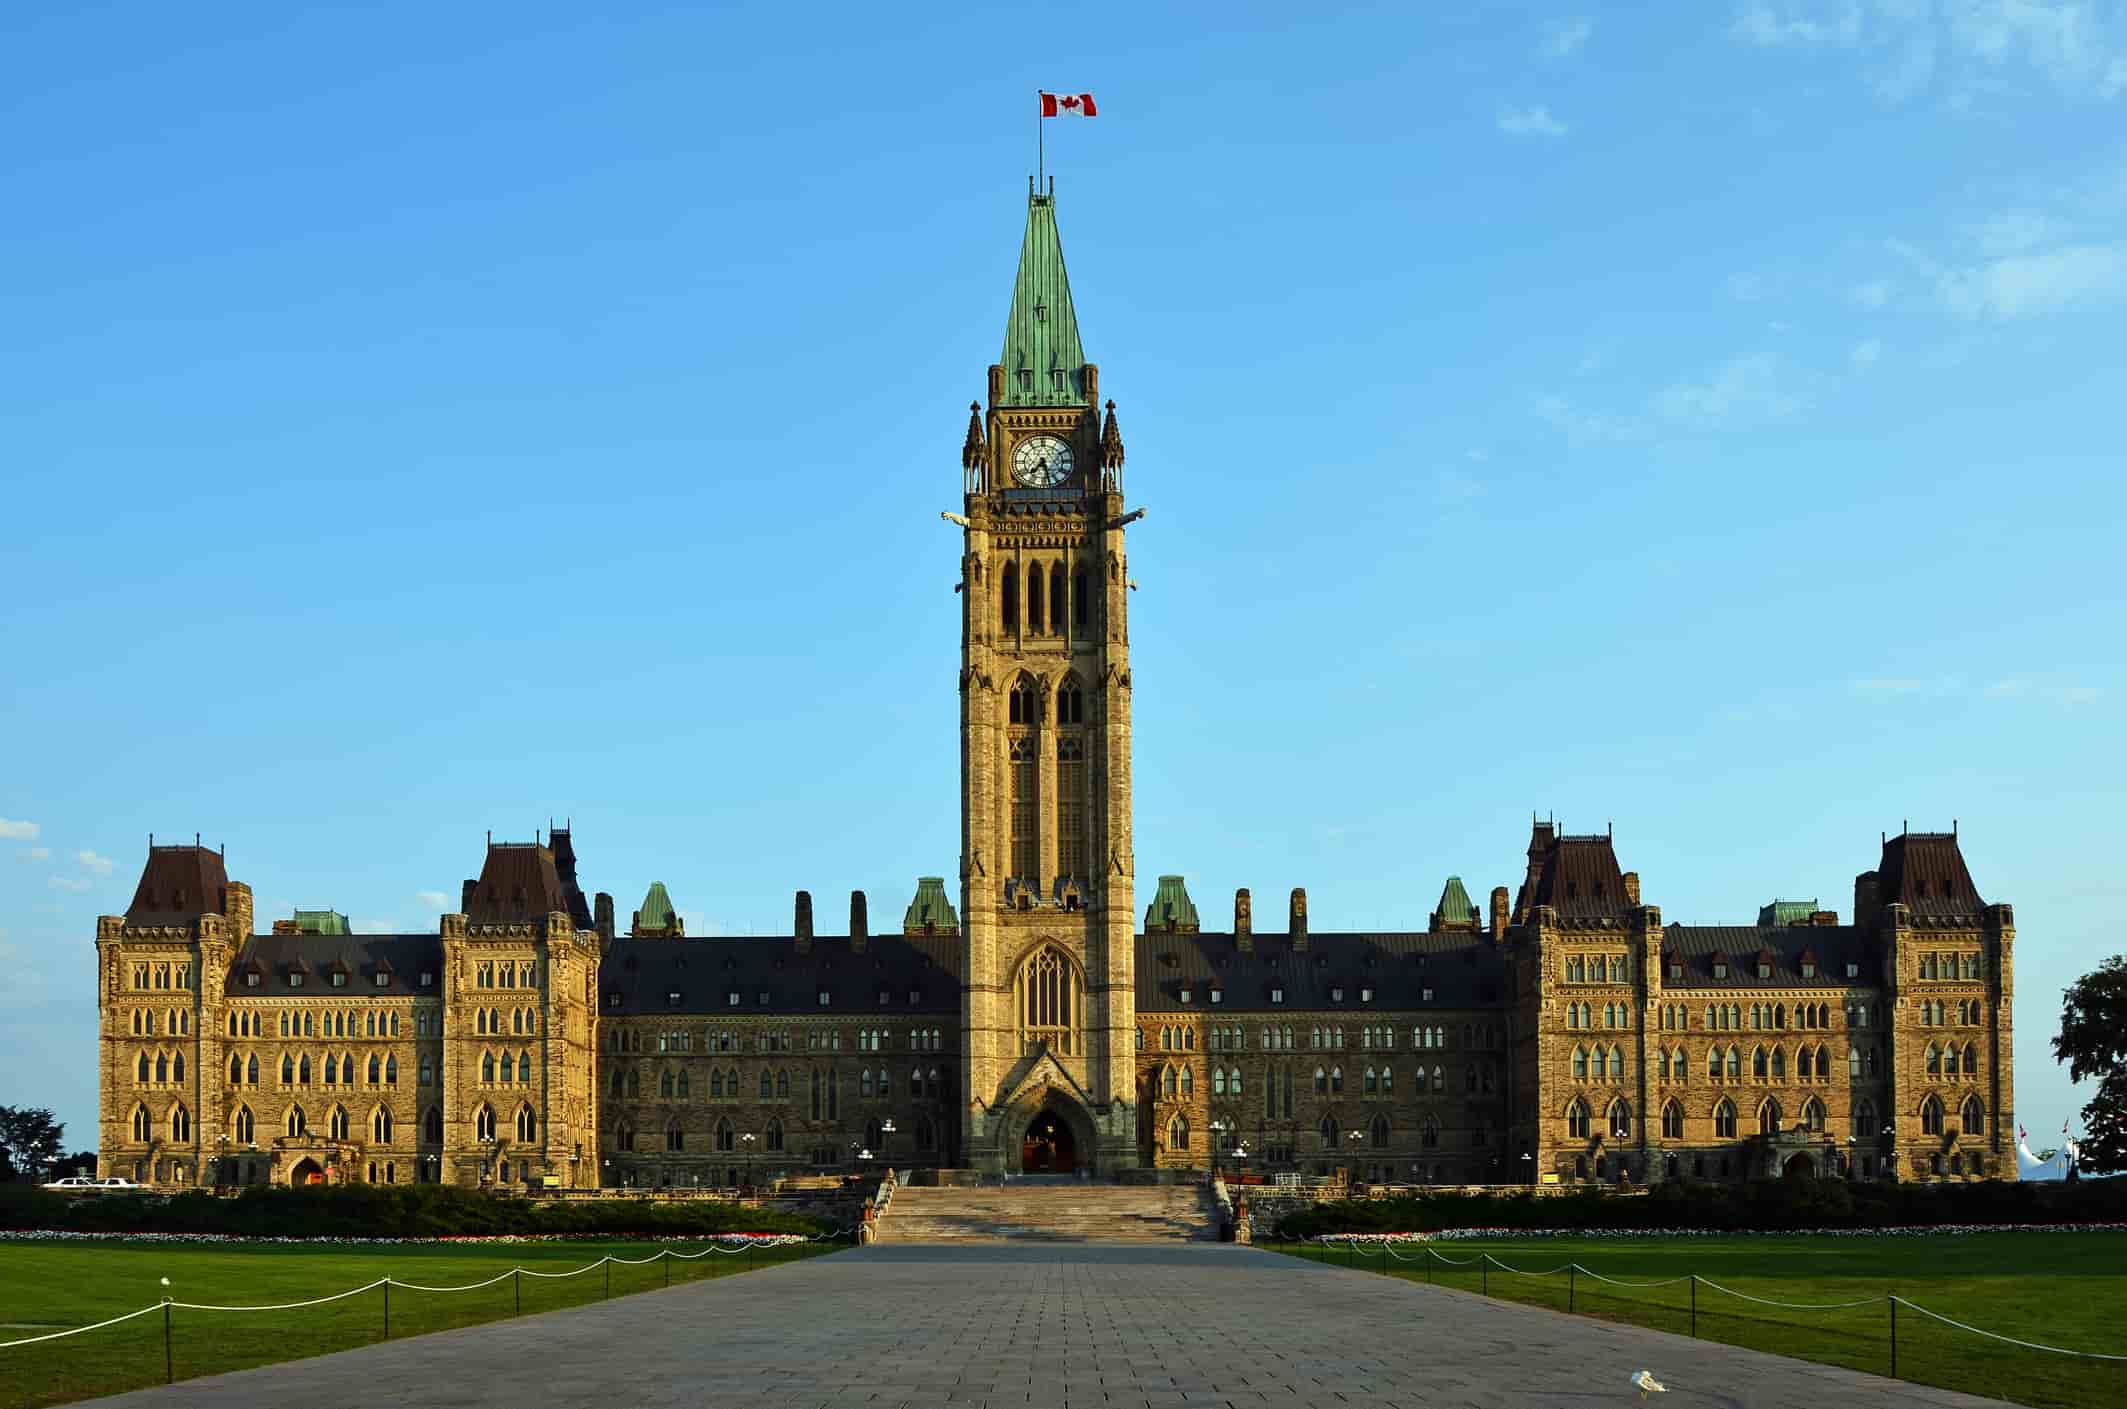 Canada's Parliament Building in Ottawa, Canada